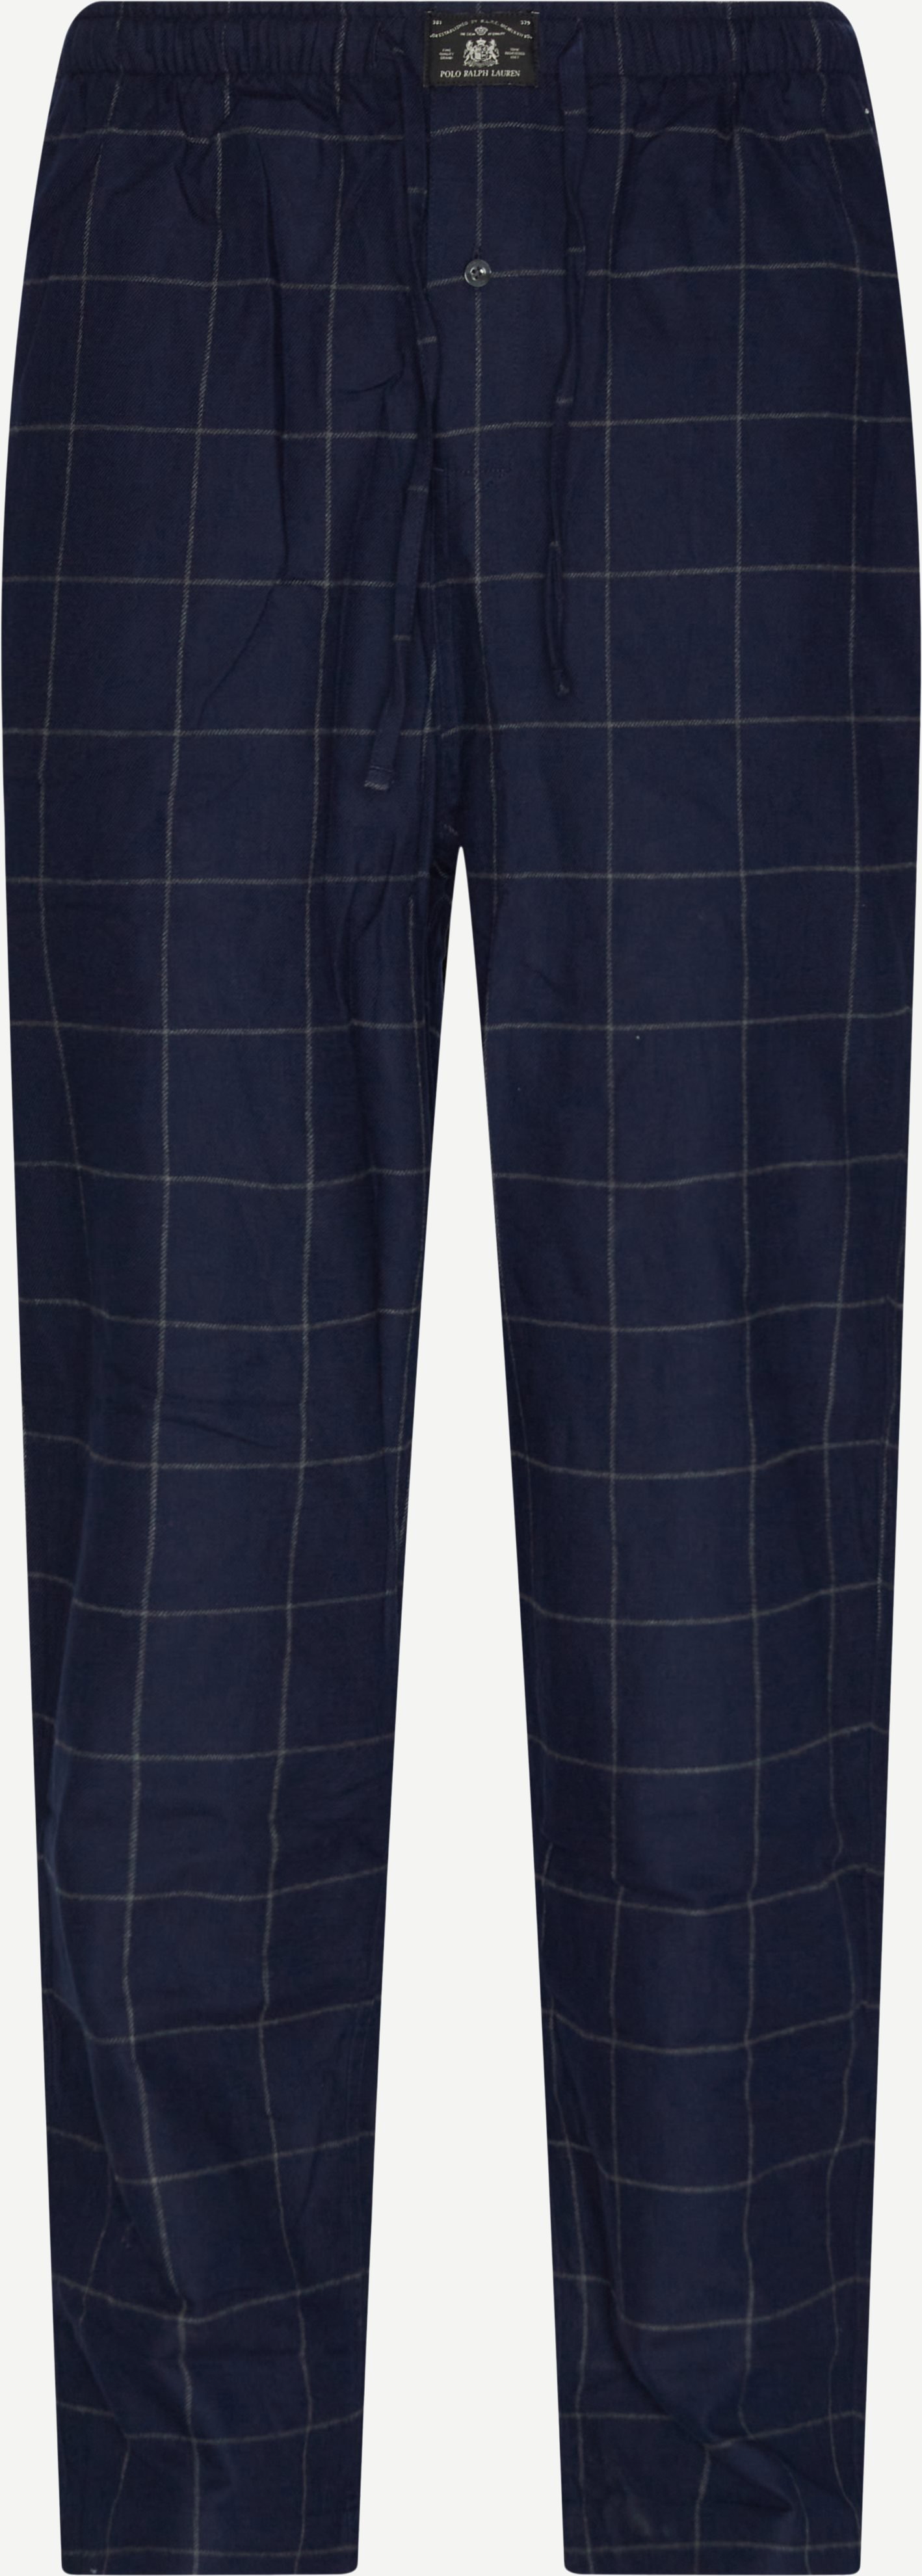 Pyjamasbukser - Undertøj - Regular fit - Blå